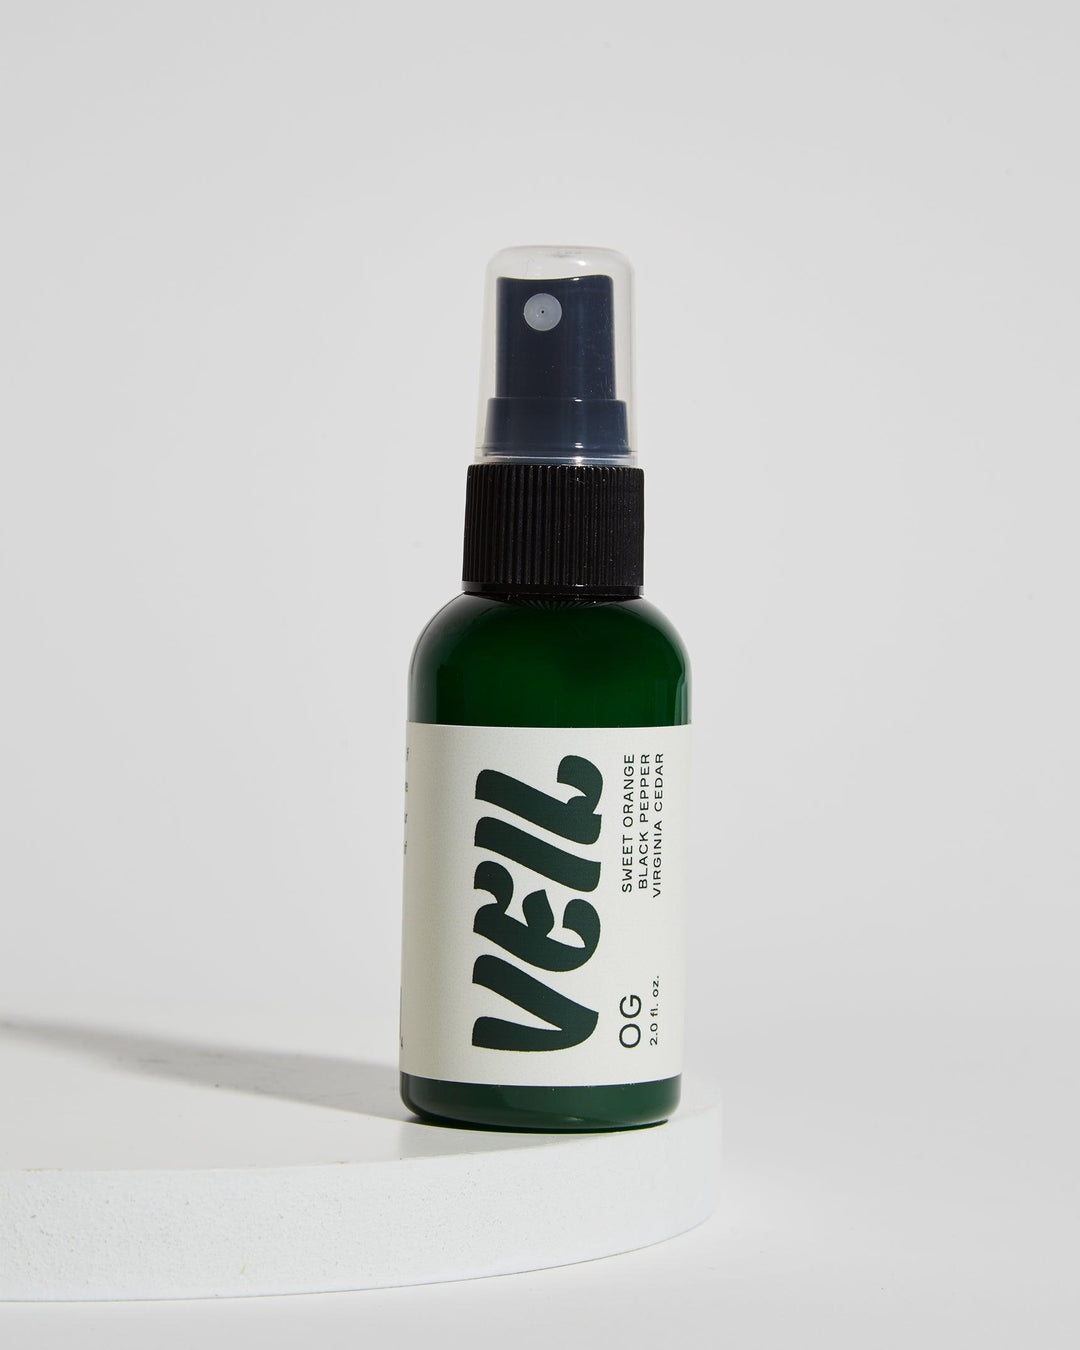 veil 2 oz. cannabis odor eliminator spray bottle